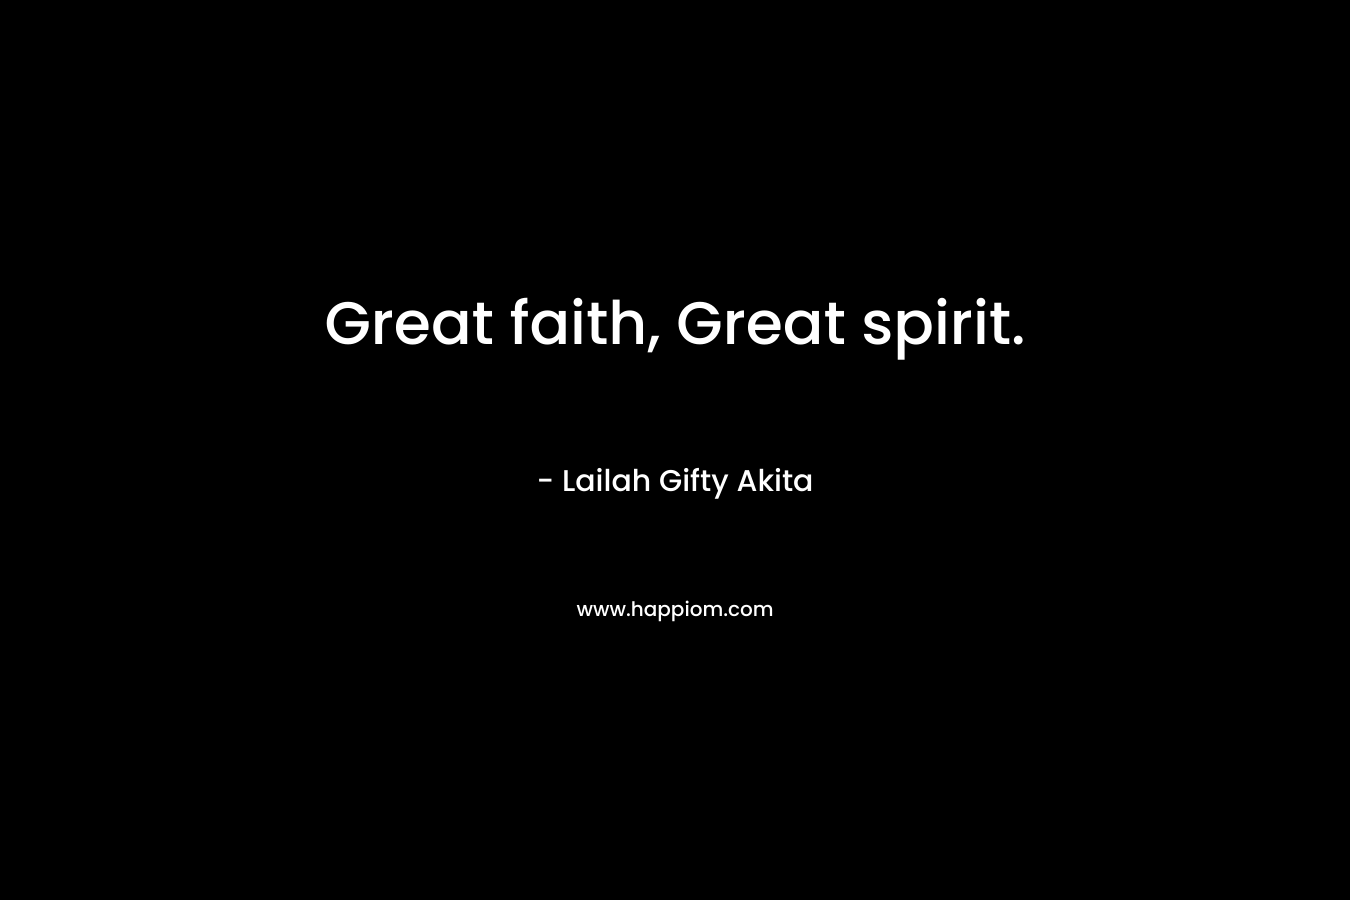 Great faith, Great spirit.